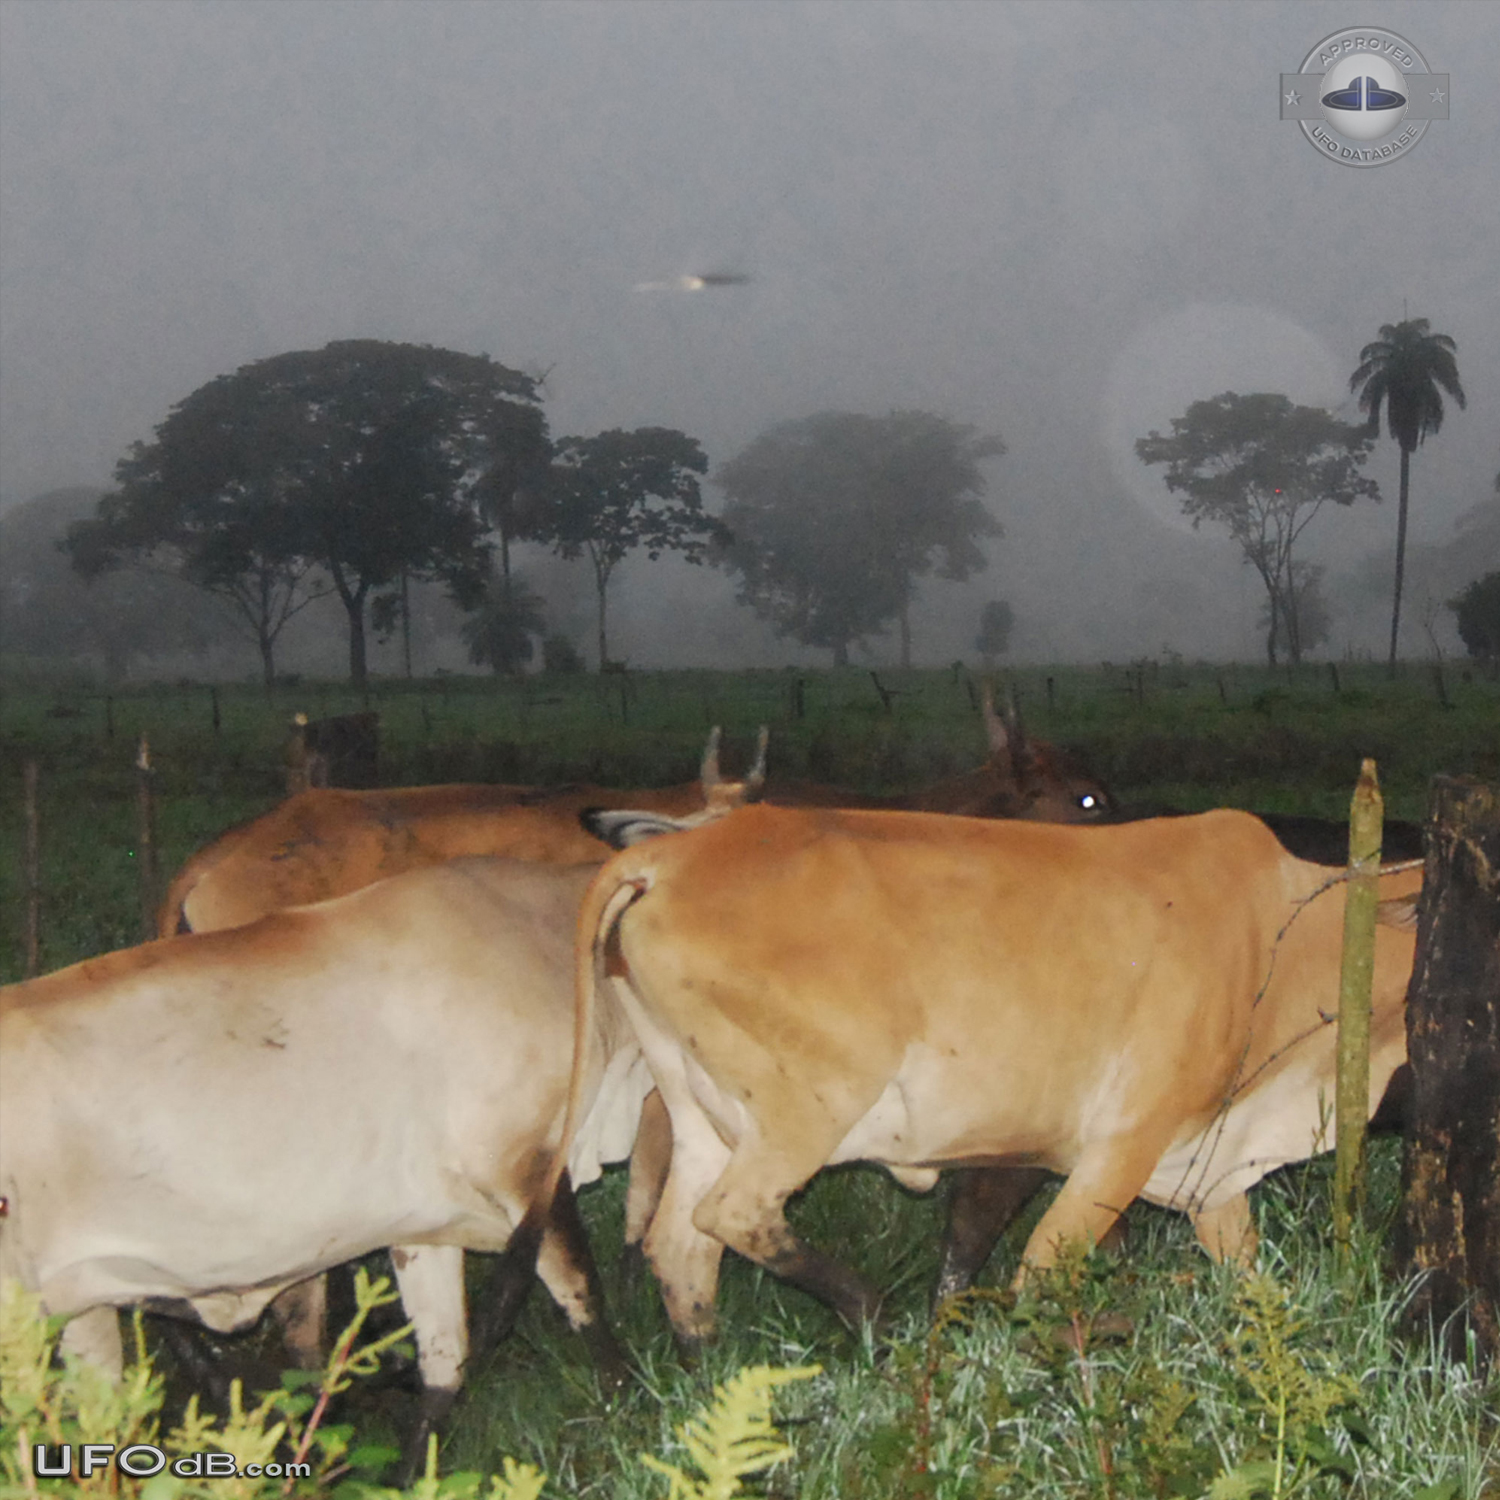 Cattle farm picture reveals passing saucer UFO in Portugesa, Venezuela UFO Picture #484-1